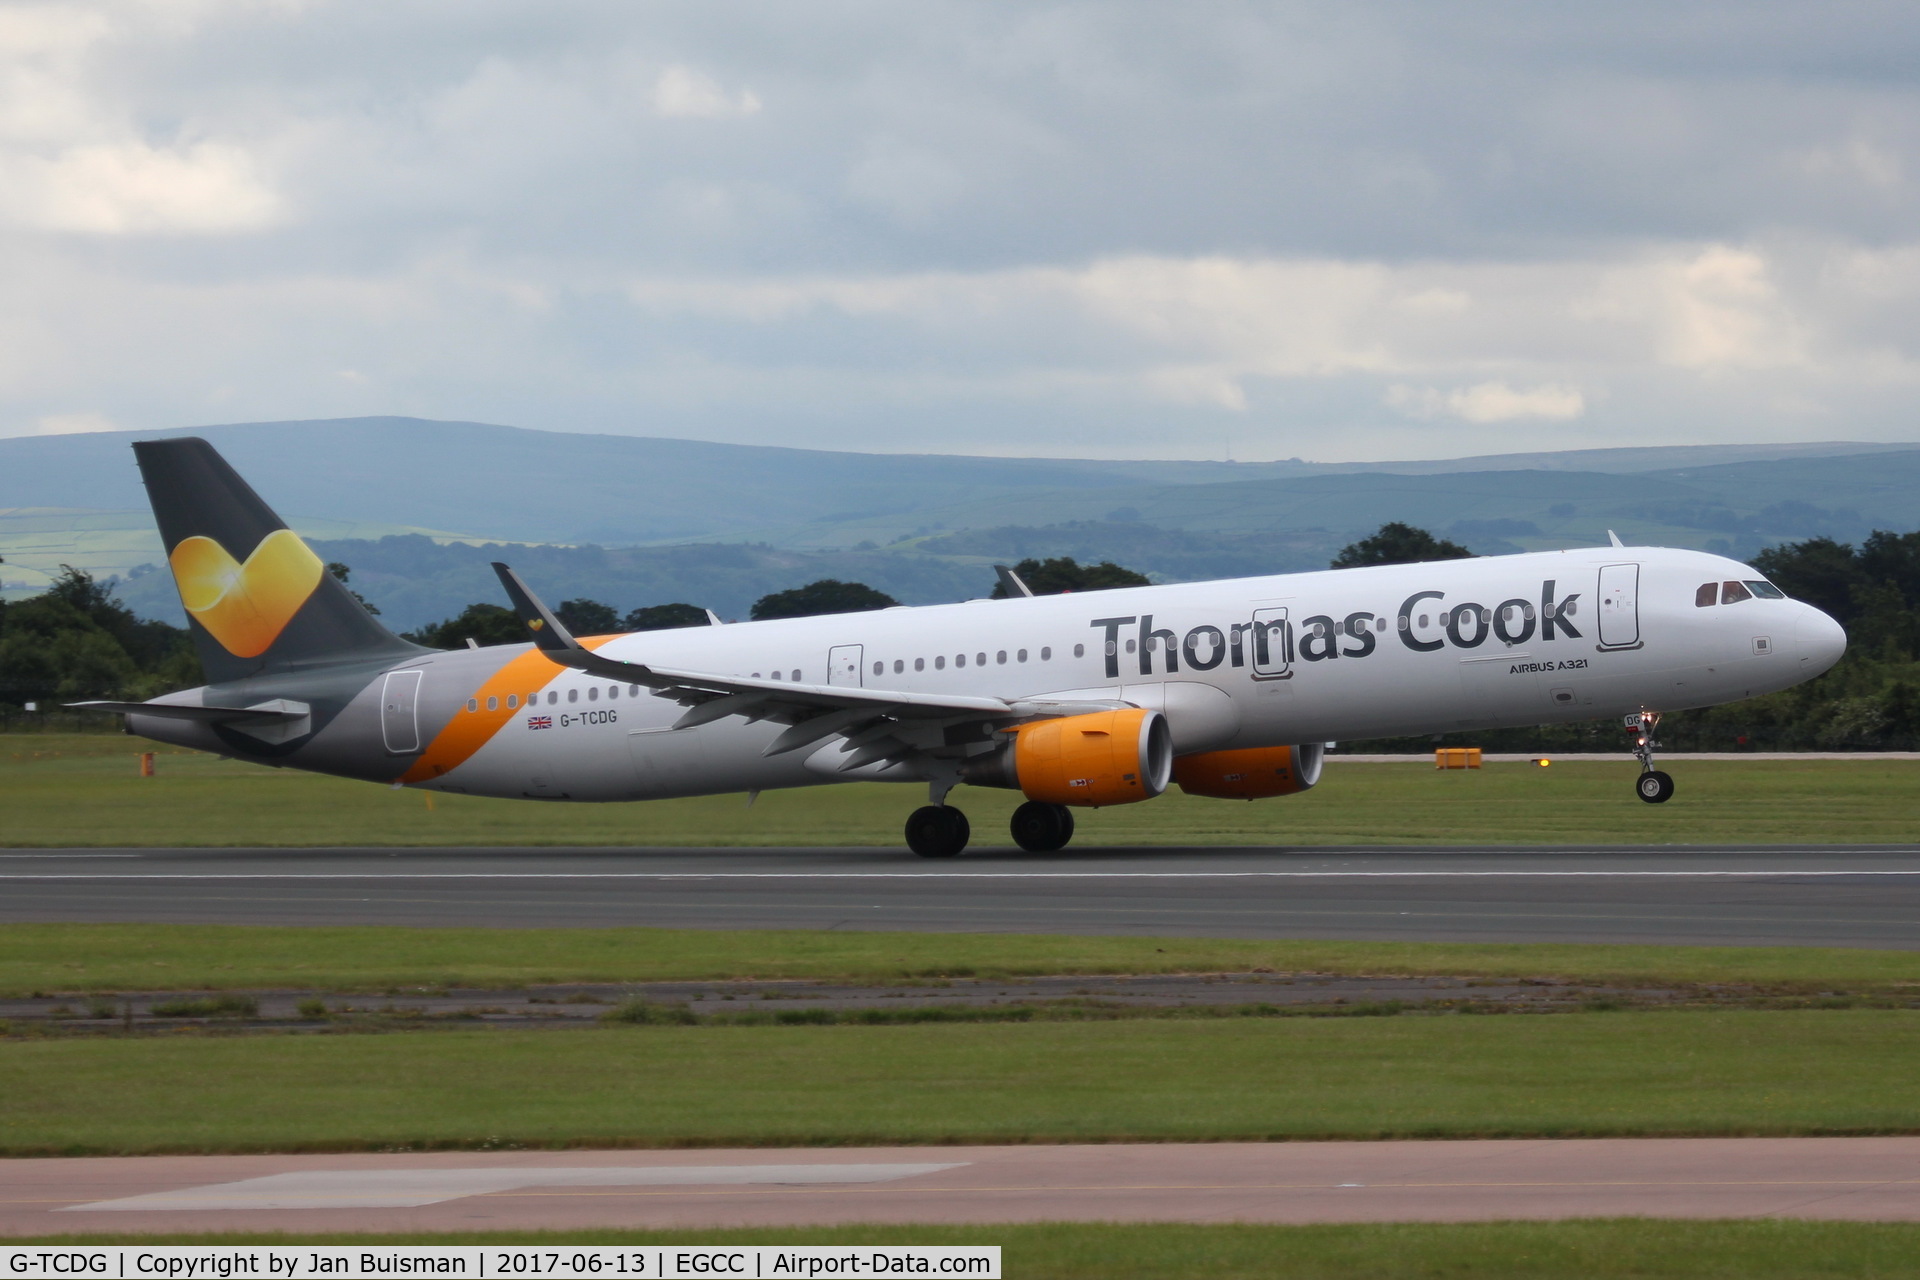 G-TCDG, 2014 Airbus A321-211 C/N 6122, Thomas Cook